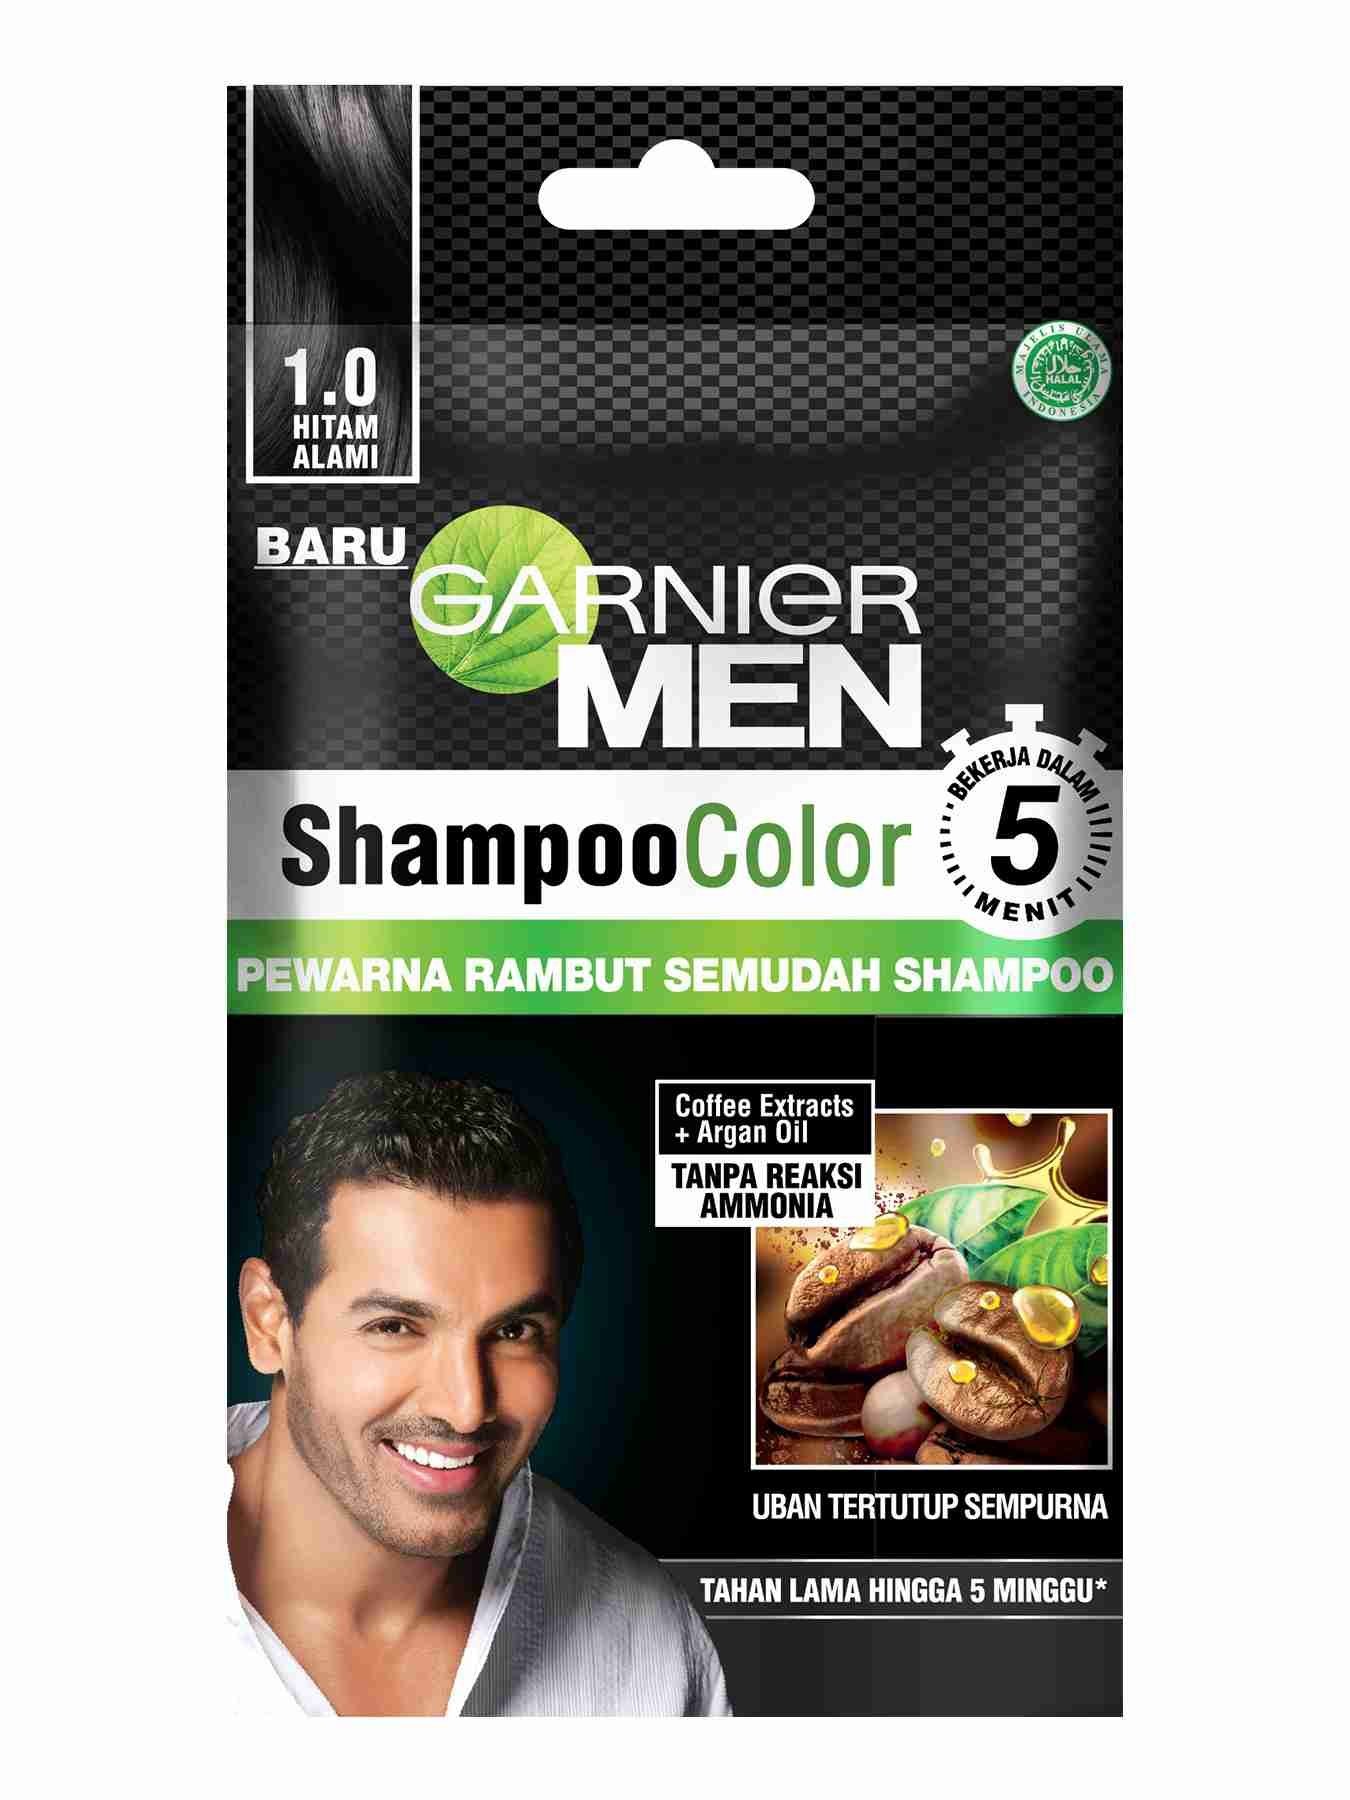 Gambar Garnier Men Shampoo Color - Hitam Alami